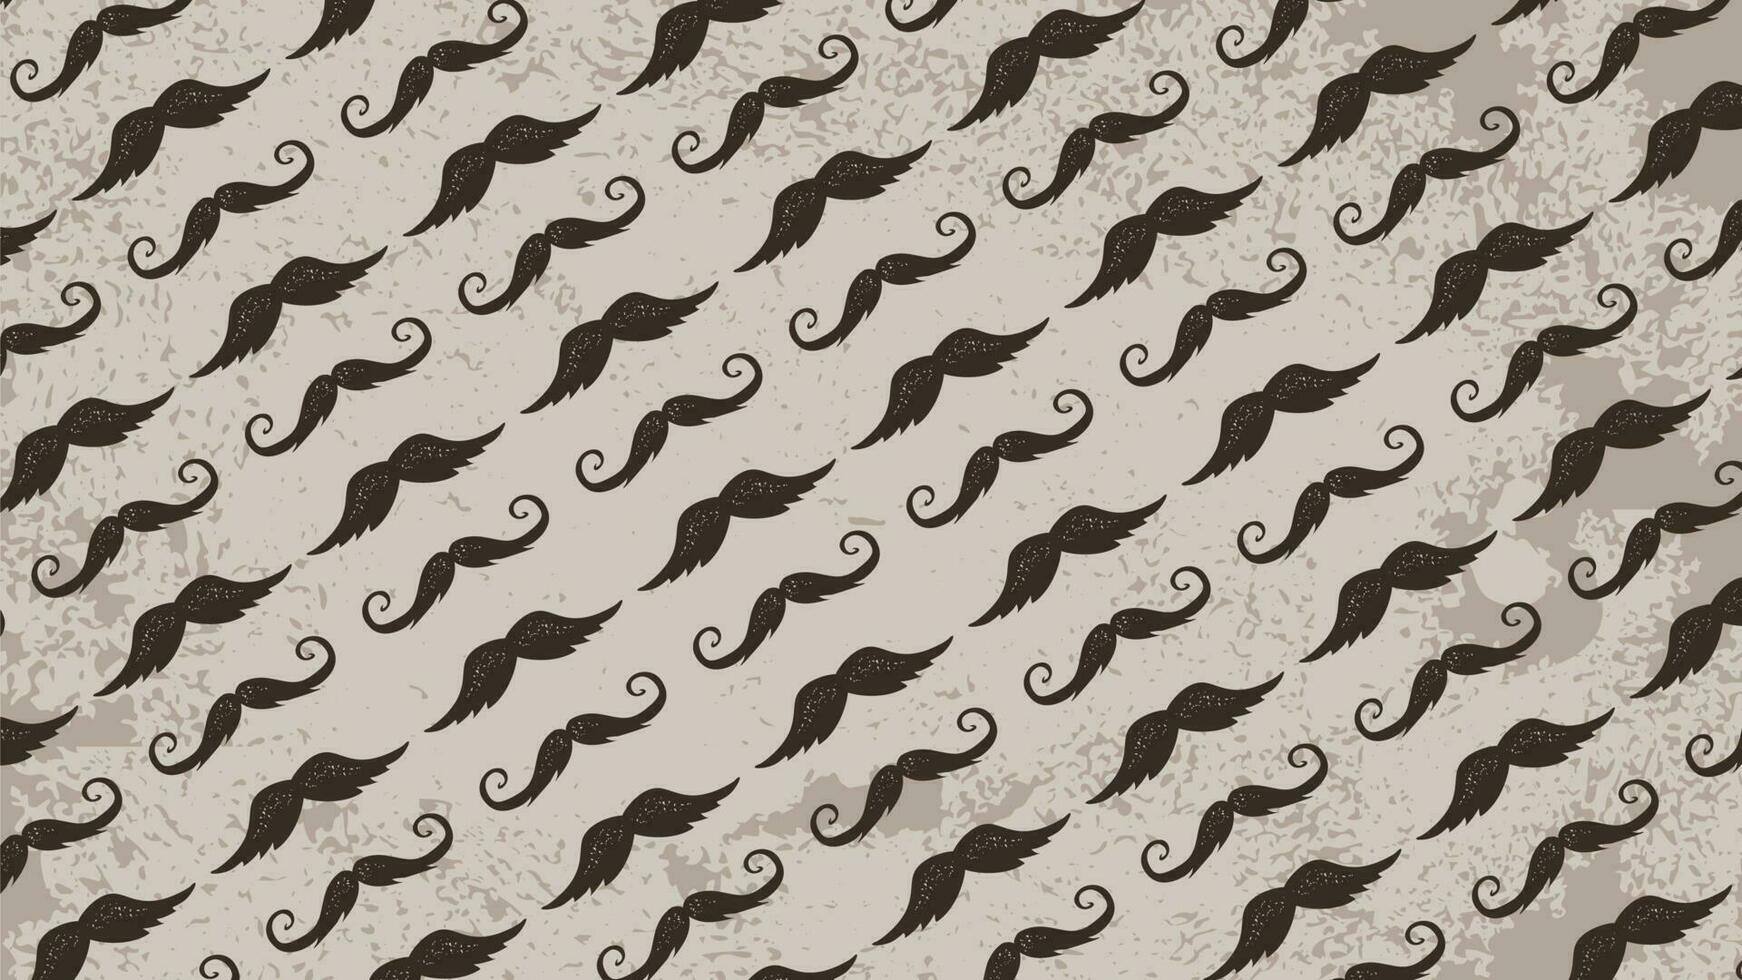 grunge mustache seamless pattern vector background